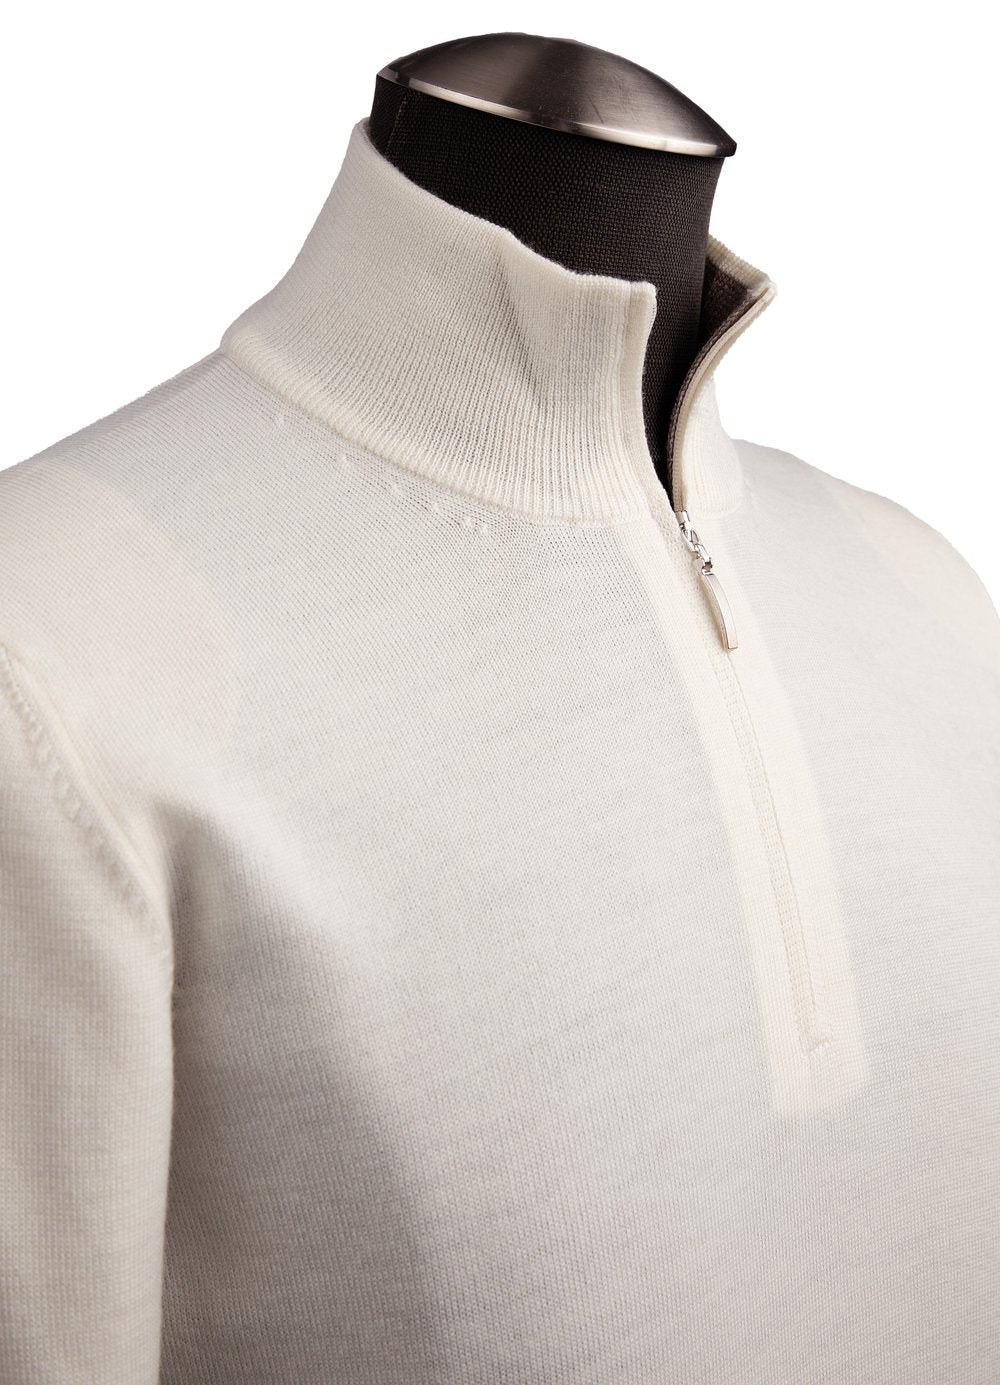 Gran Sasso Extra Fine Merino Wool Quarter-Zip Sweater in Off-White